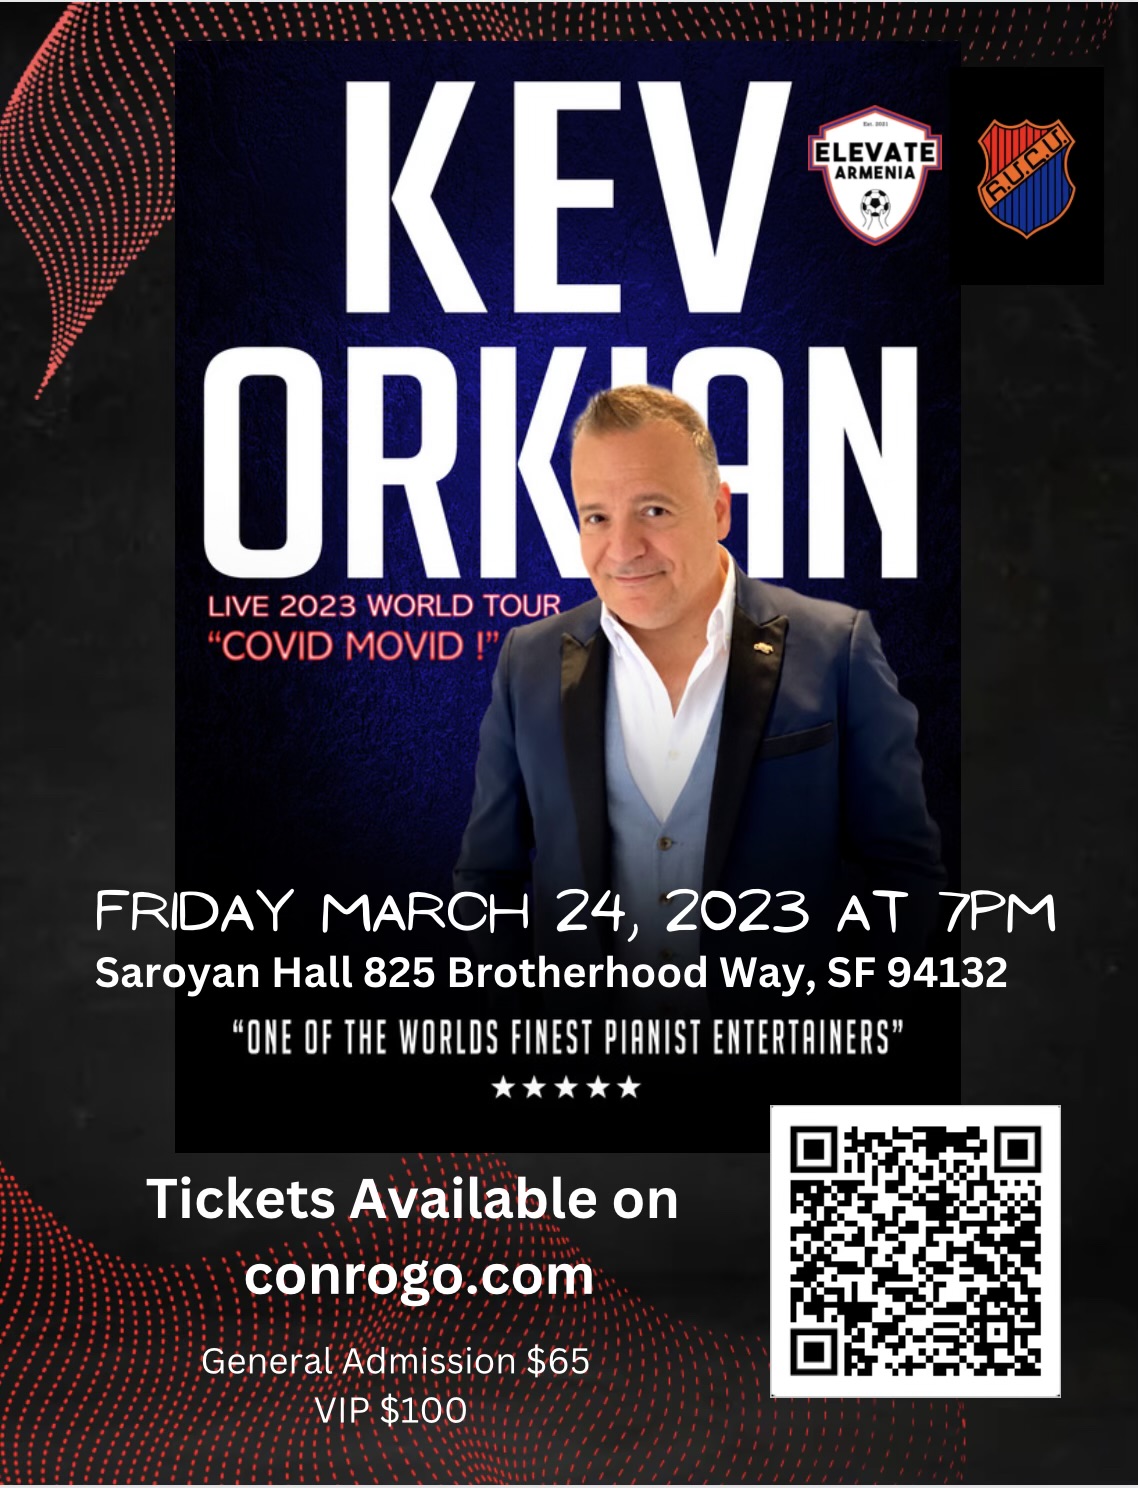 Kev Orkian Live 2023 World Tour